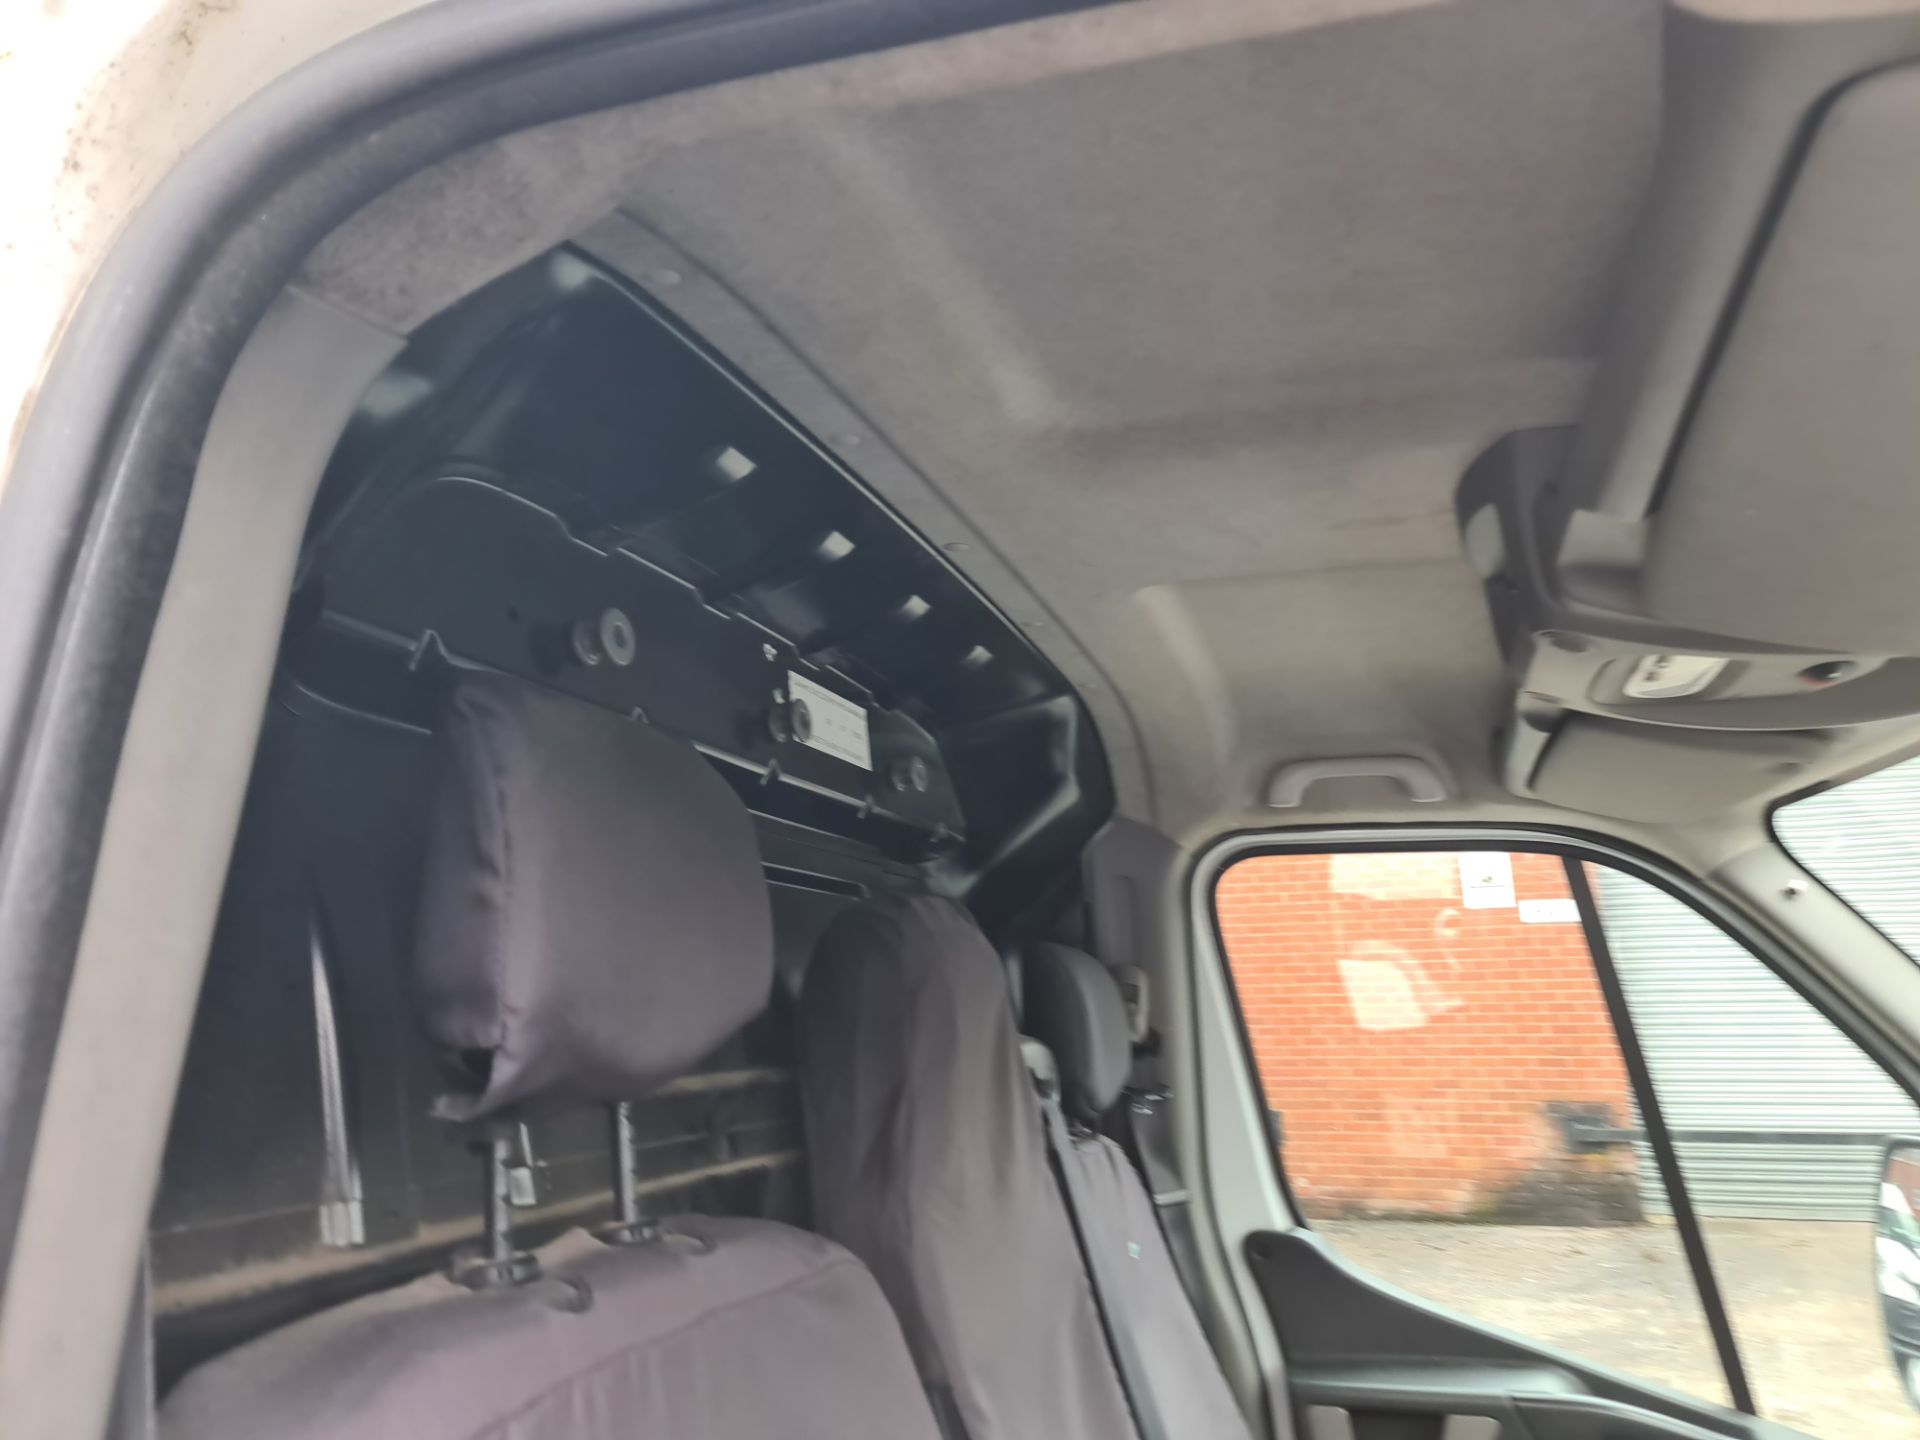 2015 Nissan NV400 SE DCI panel van - Image 17 of 74